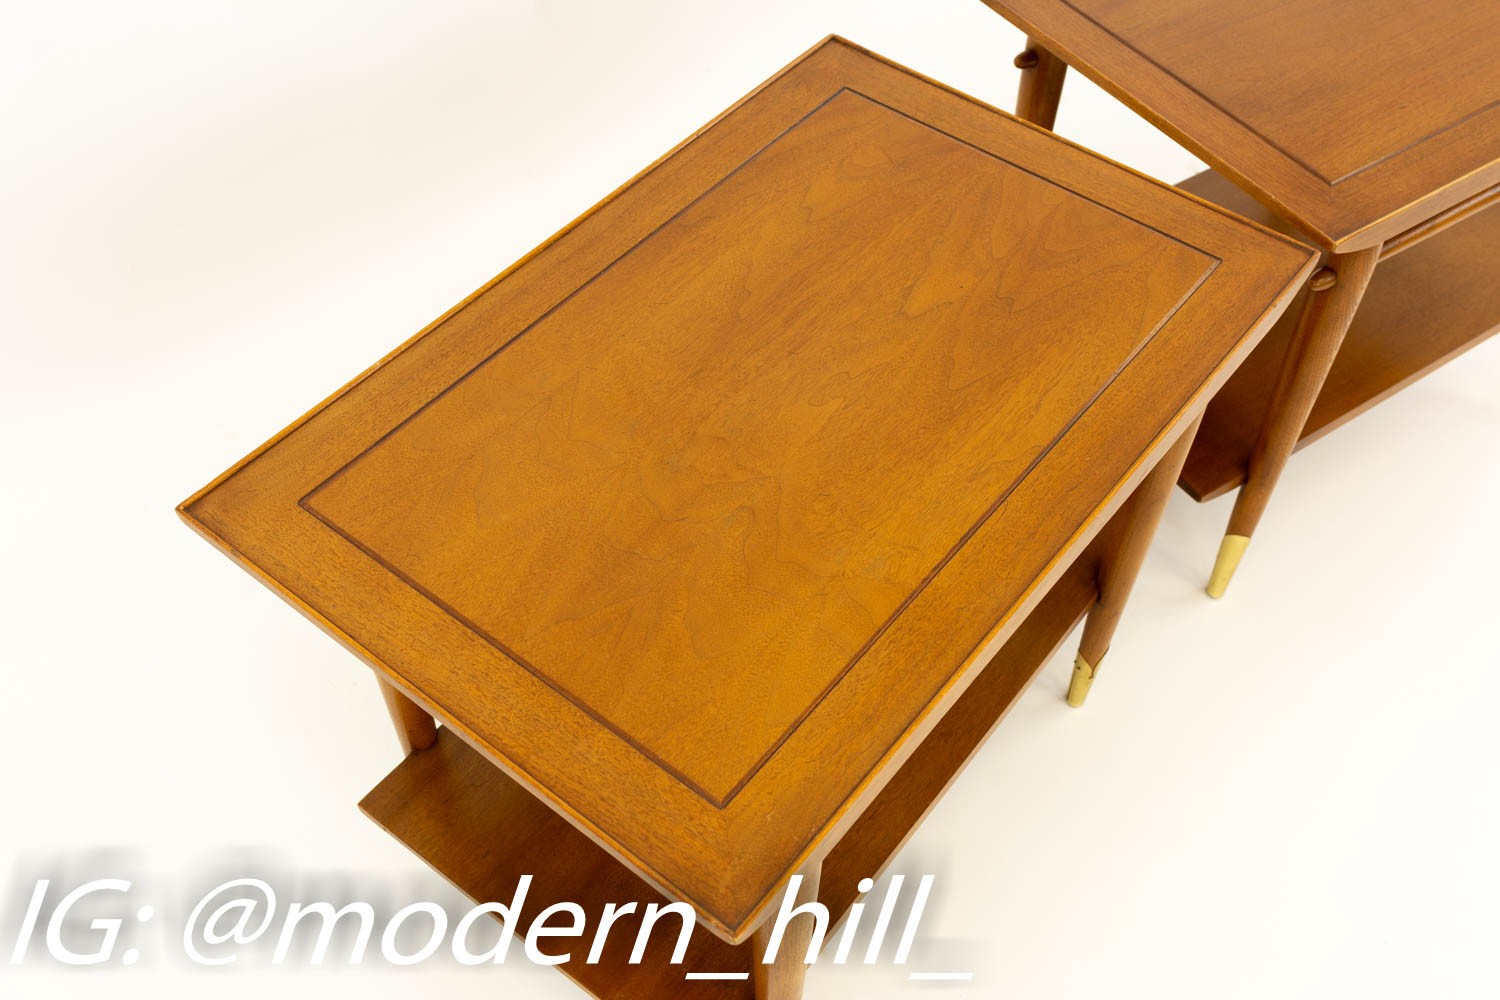 Lane Alta Vista Walnut and Brass Mid Century Modern Side End Tables - Matching Pair